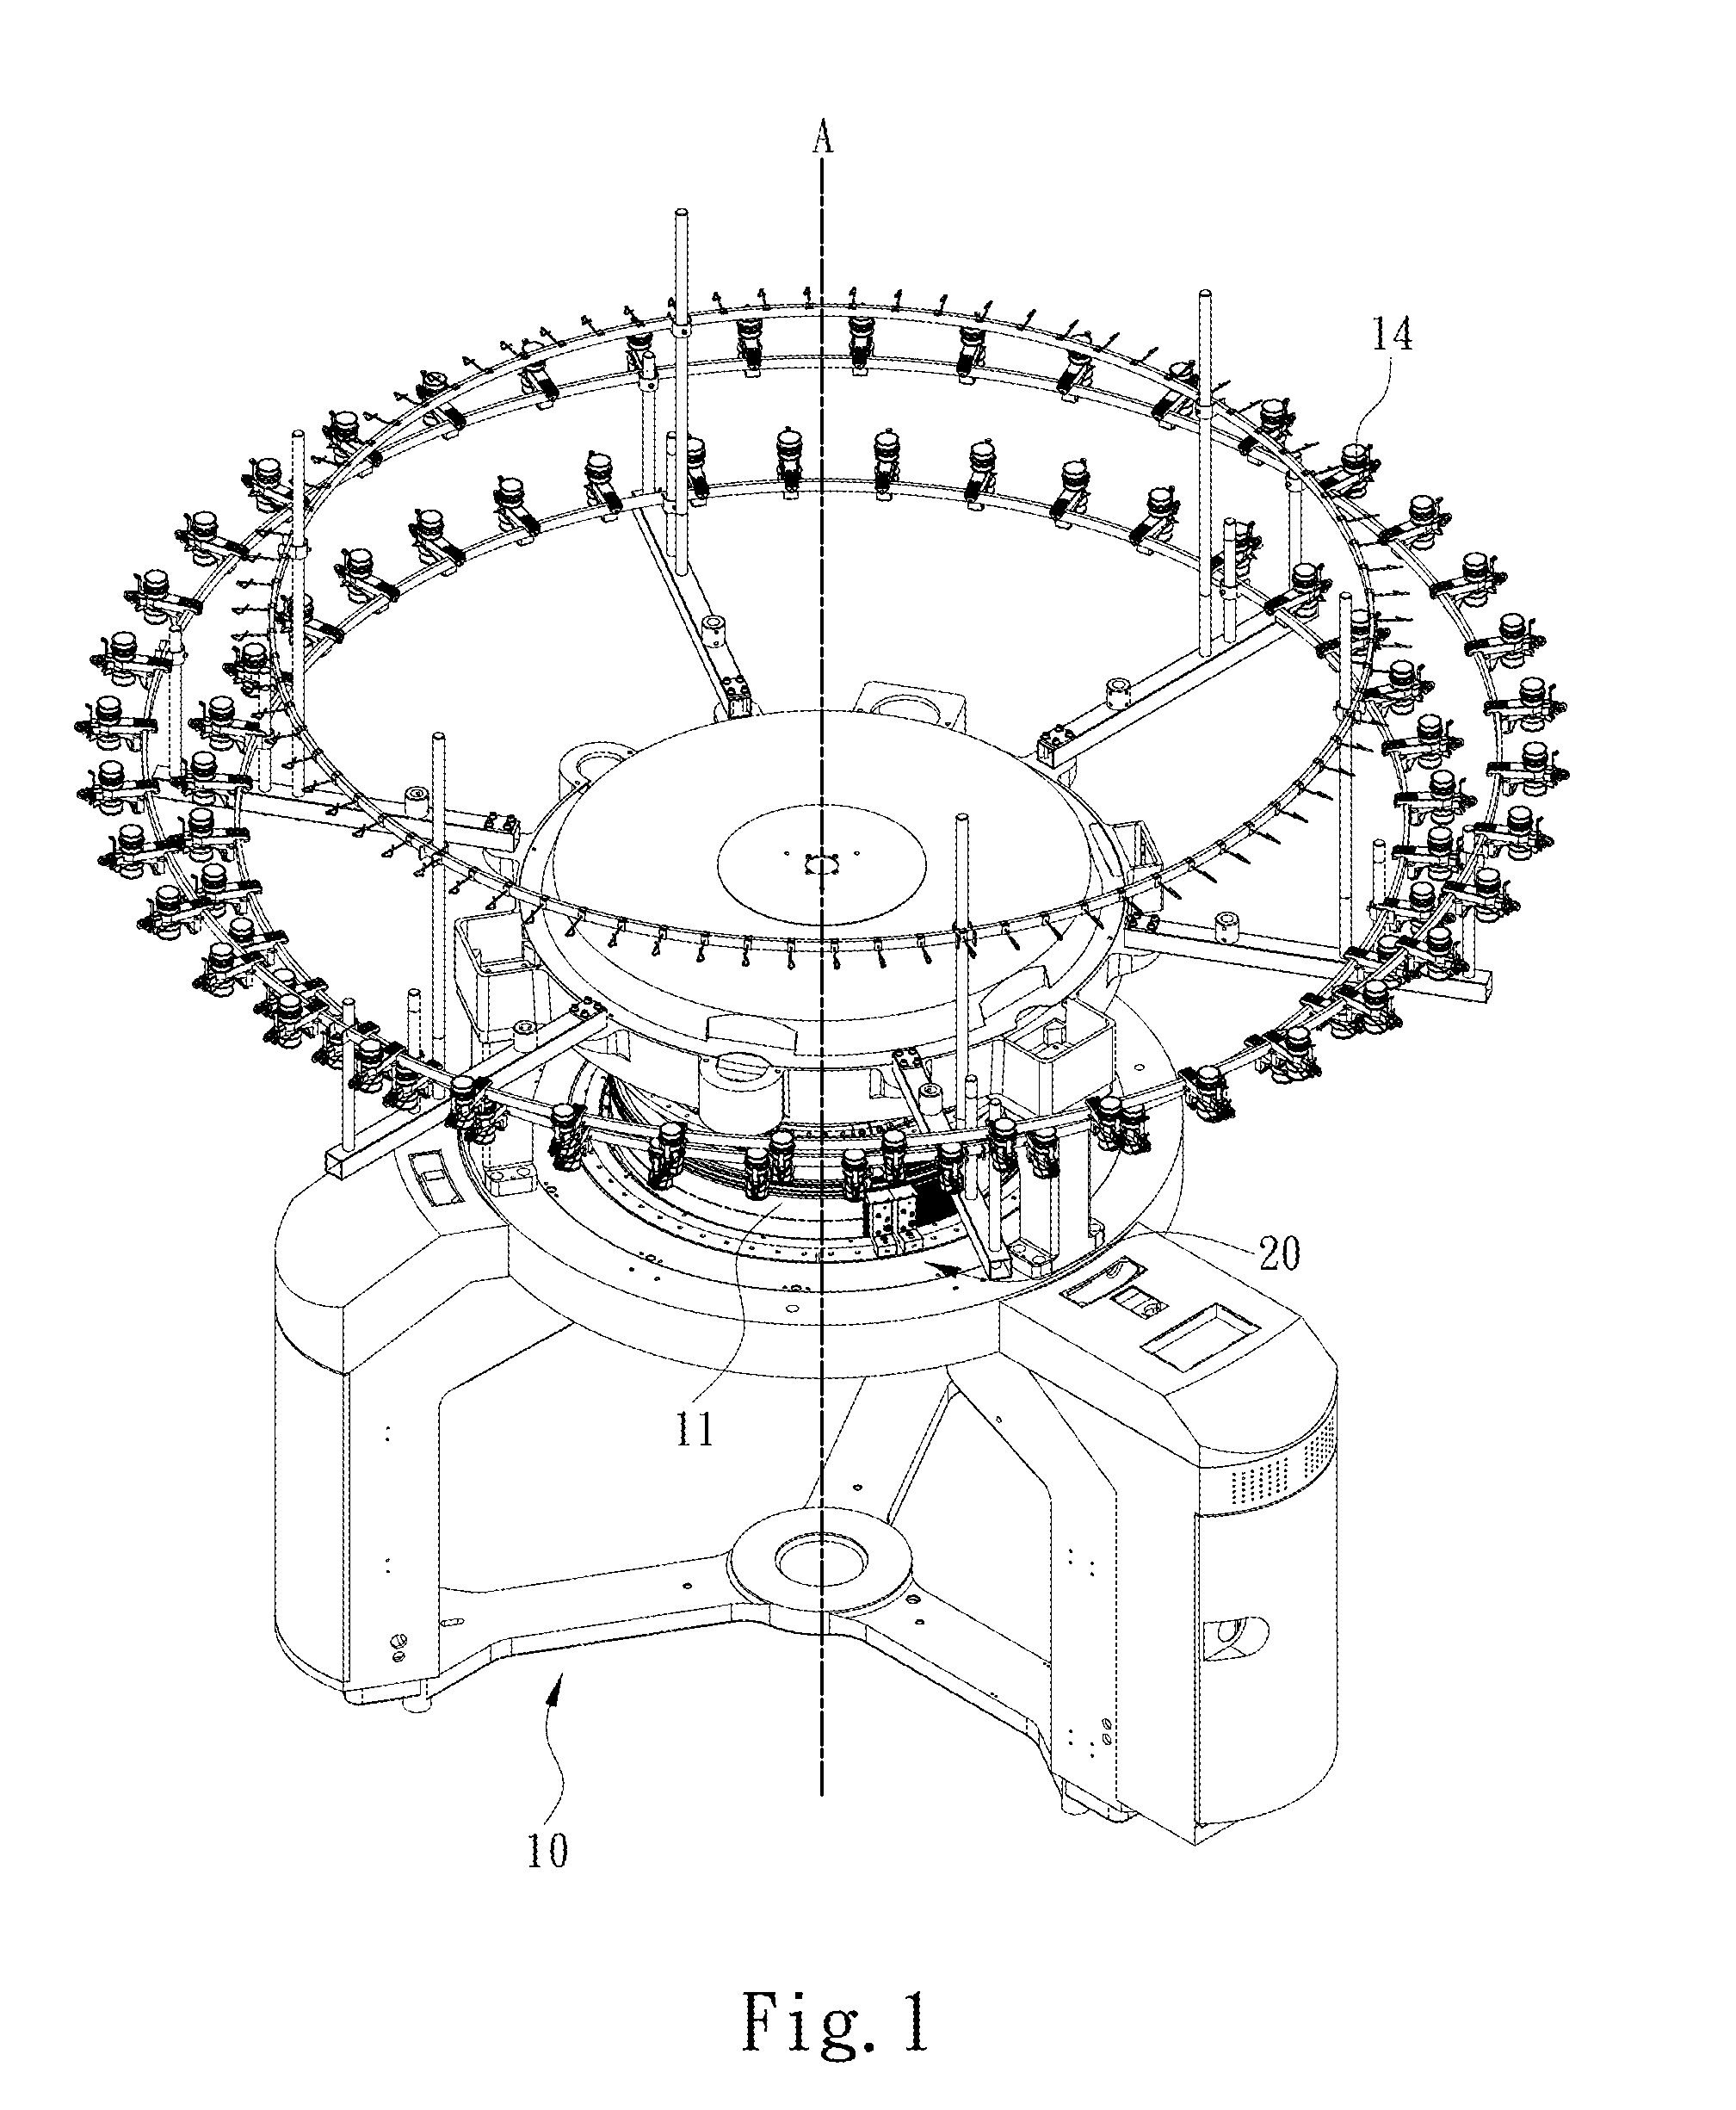 Loop cutting apparatus for circular knitting machines